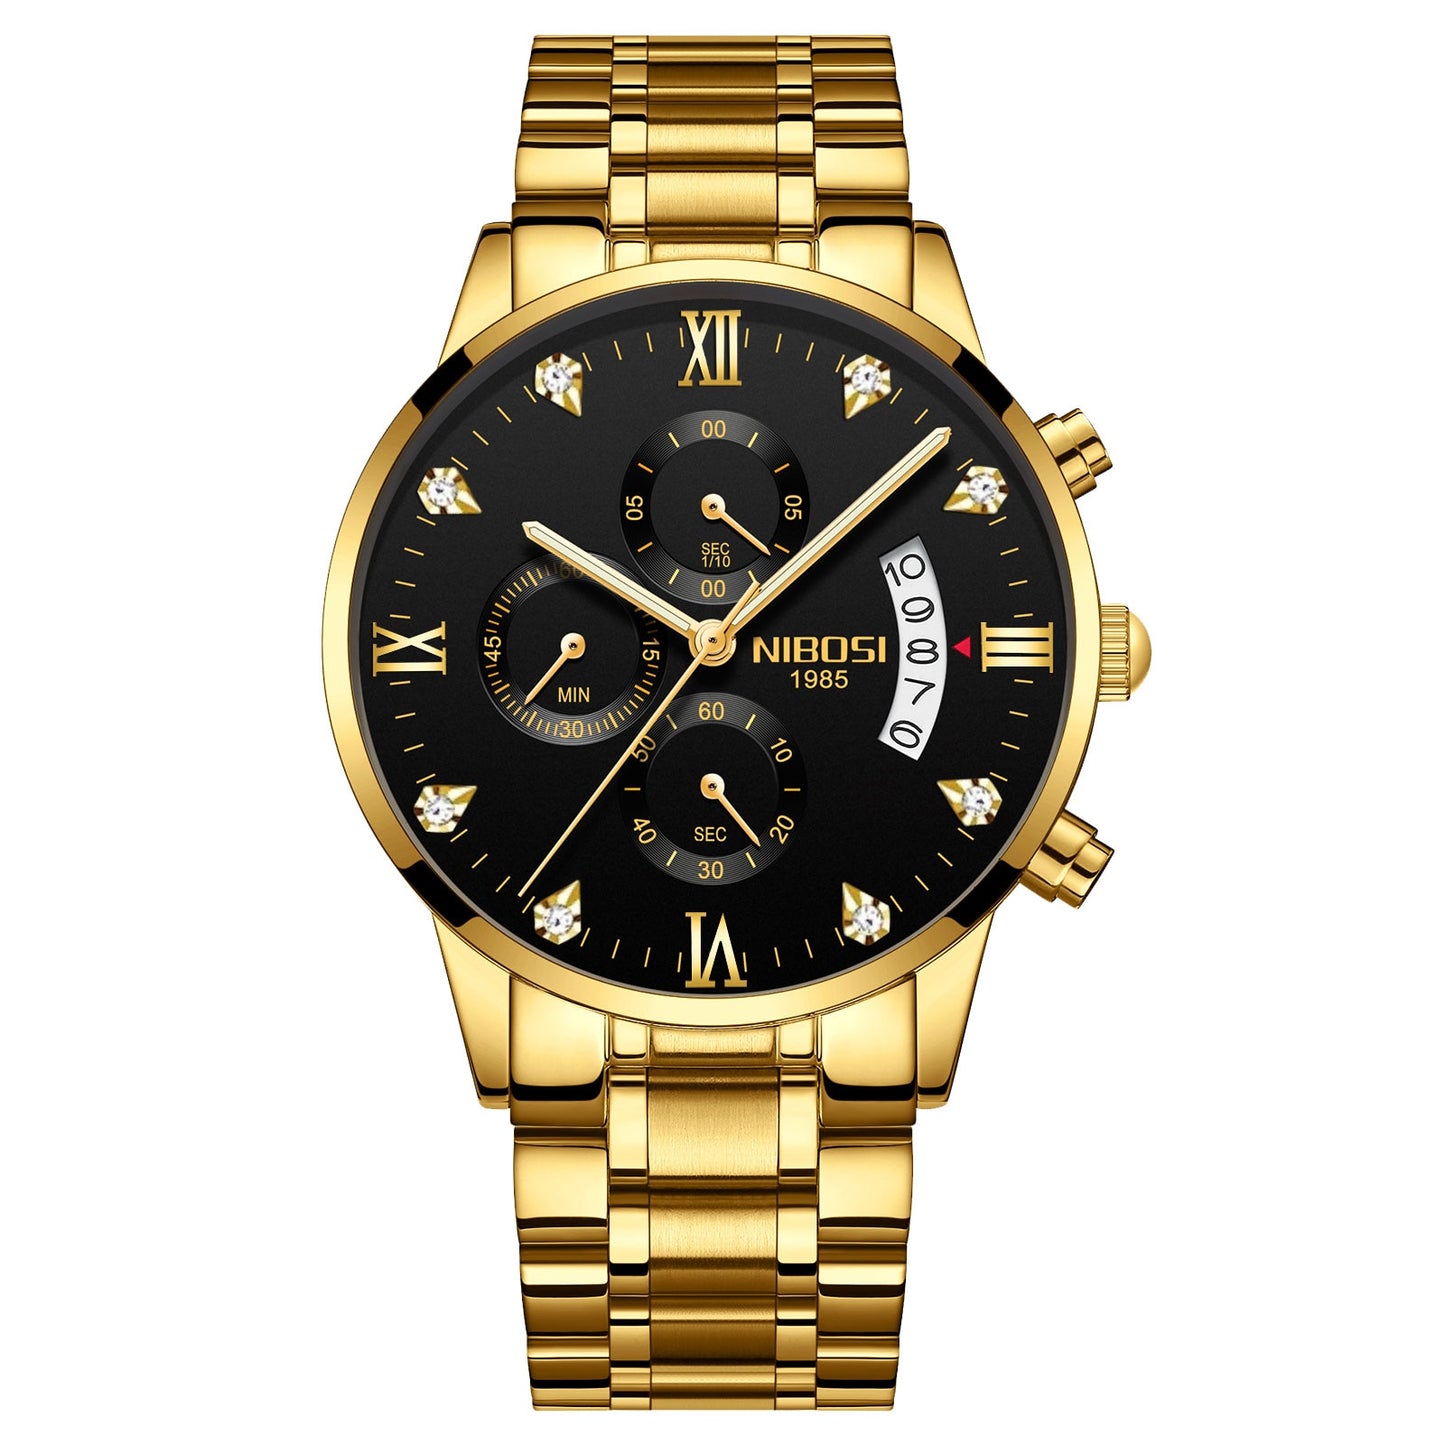 NIBOSI Relogio Masculino Men Watches Luxury Famous Top Brand Fashion Casual Dress Watch Military Quartz Wristwatches